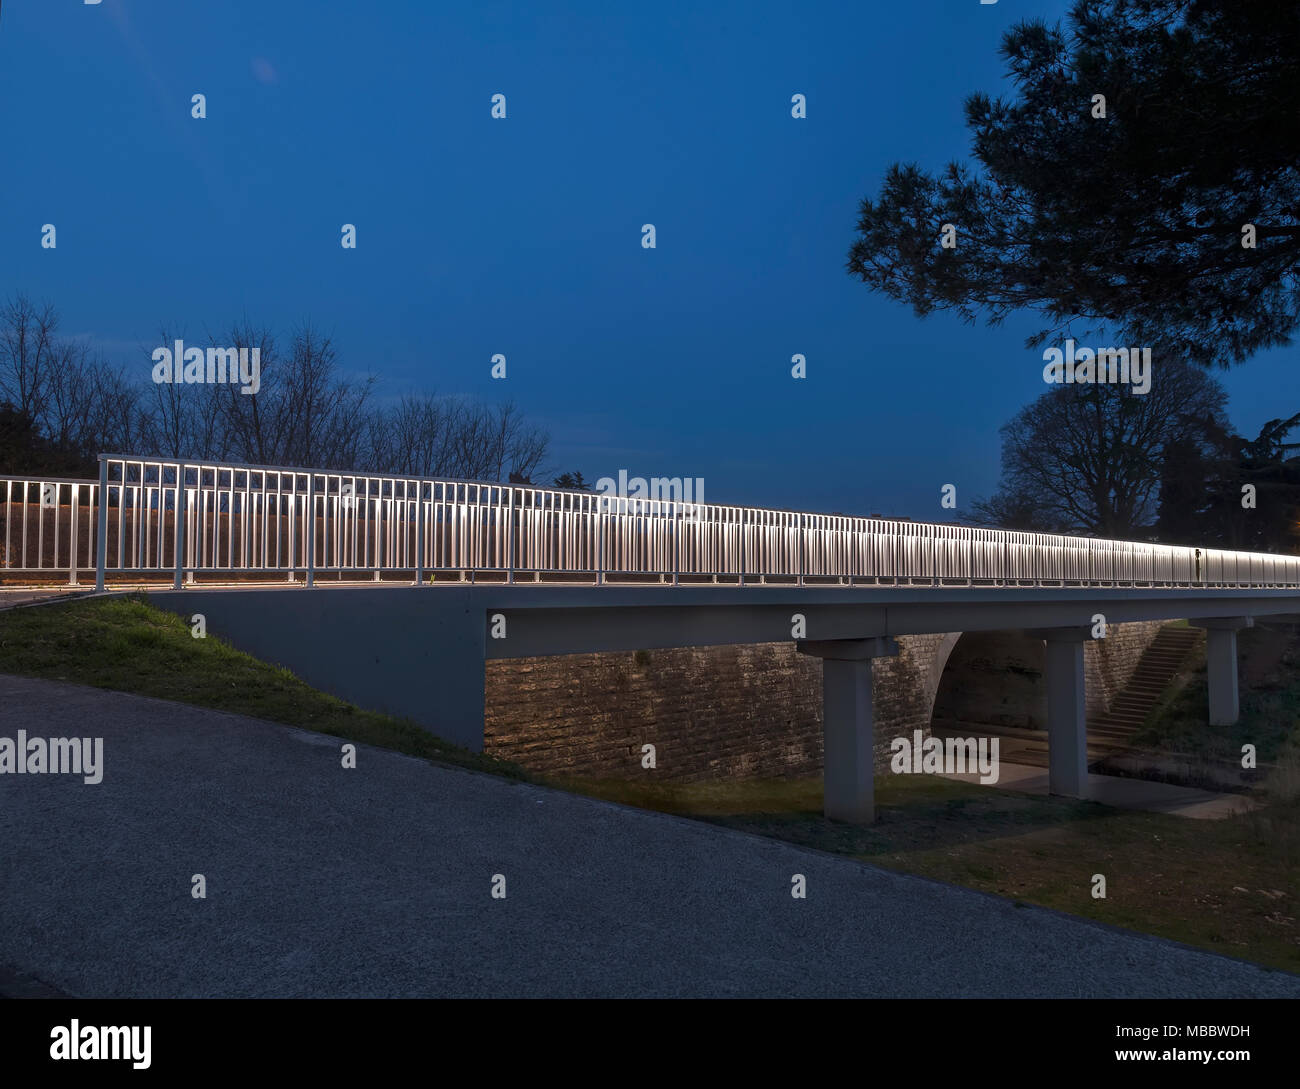 illuminated pedestrian bridge in Valbandon, Pula, Croatia Stock Photo